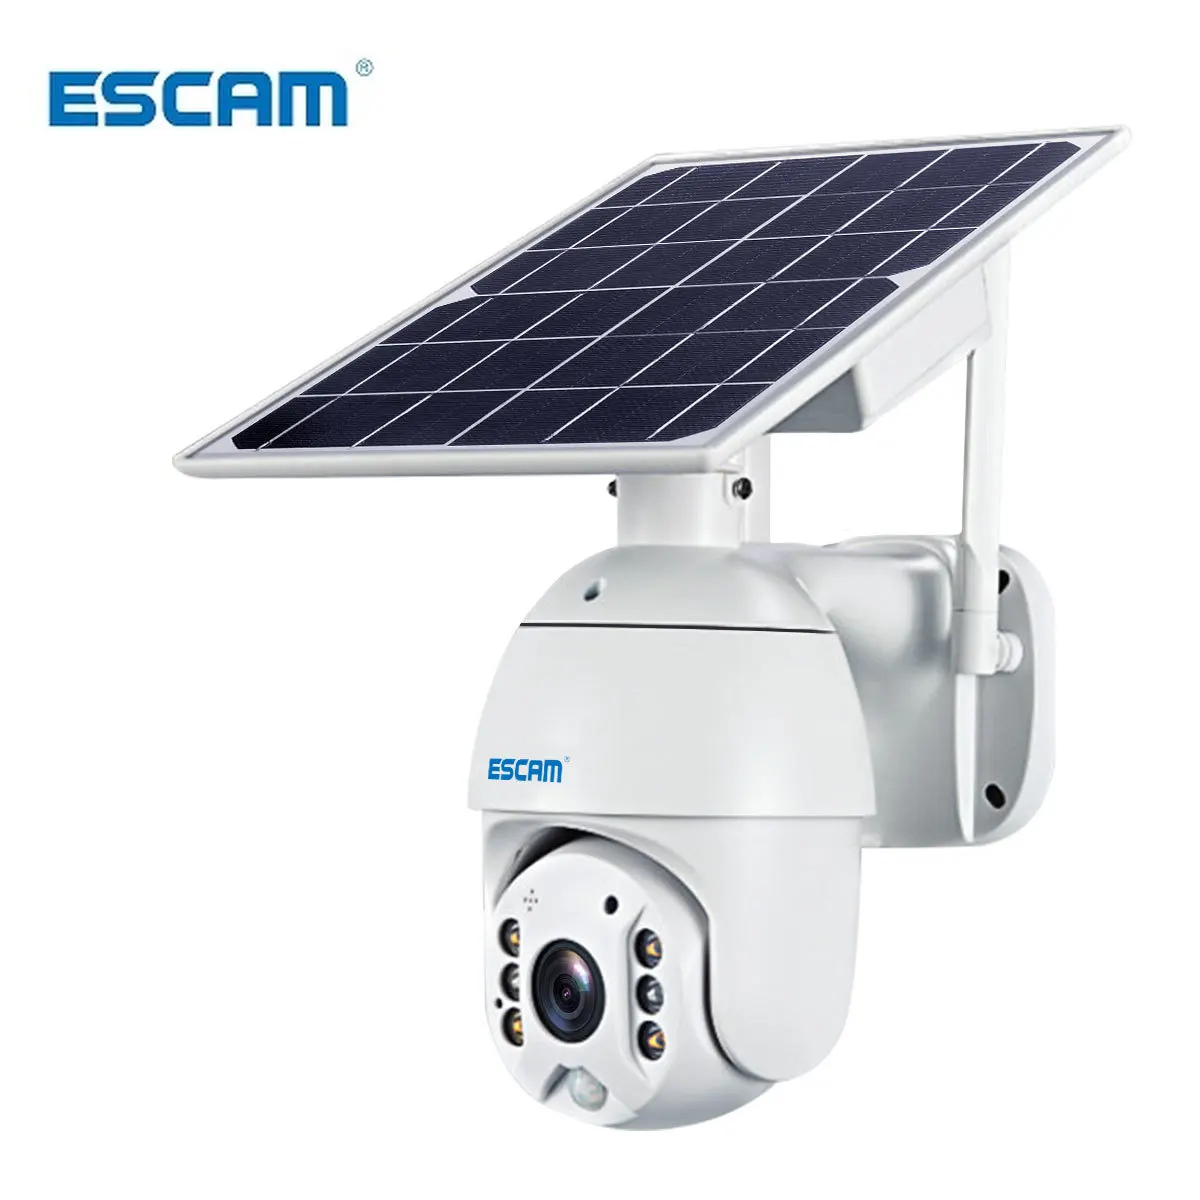 ESCAM QF480 1080P Cloud Storage PTZ 4G Battery Alarm PIR IP Kamera Z solarnimi Night Vision IP66 Nepremočljiva dvosmerni Audio